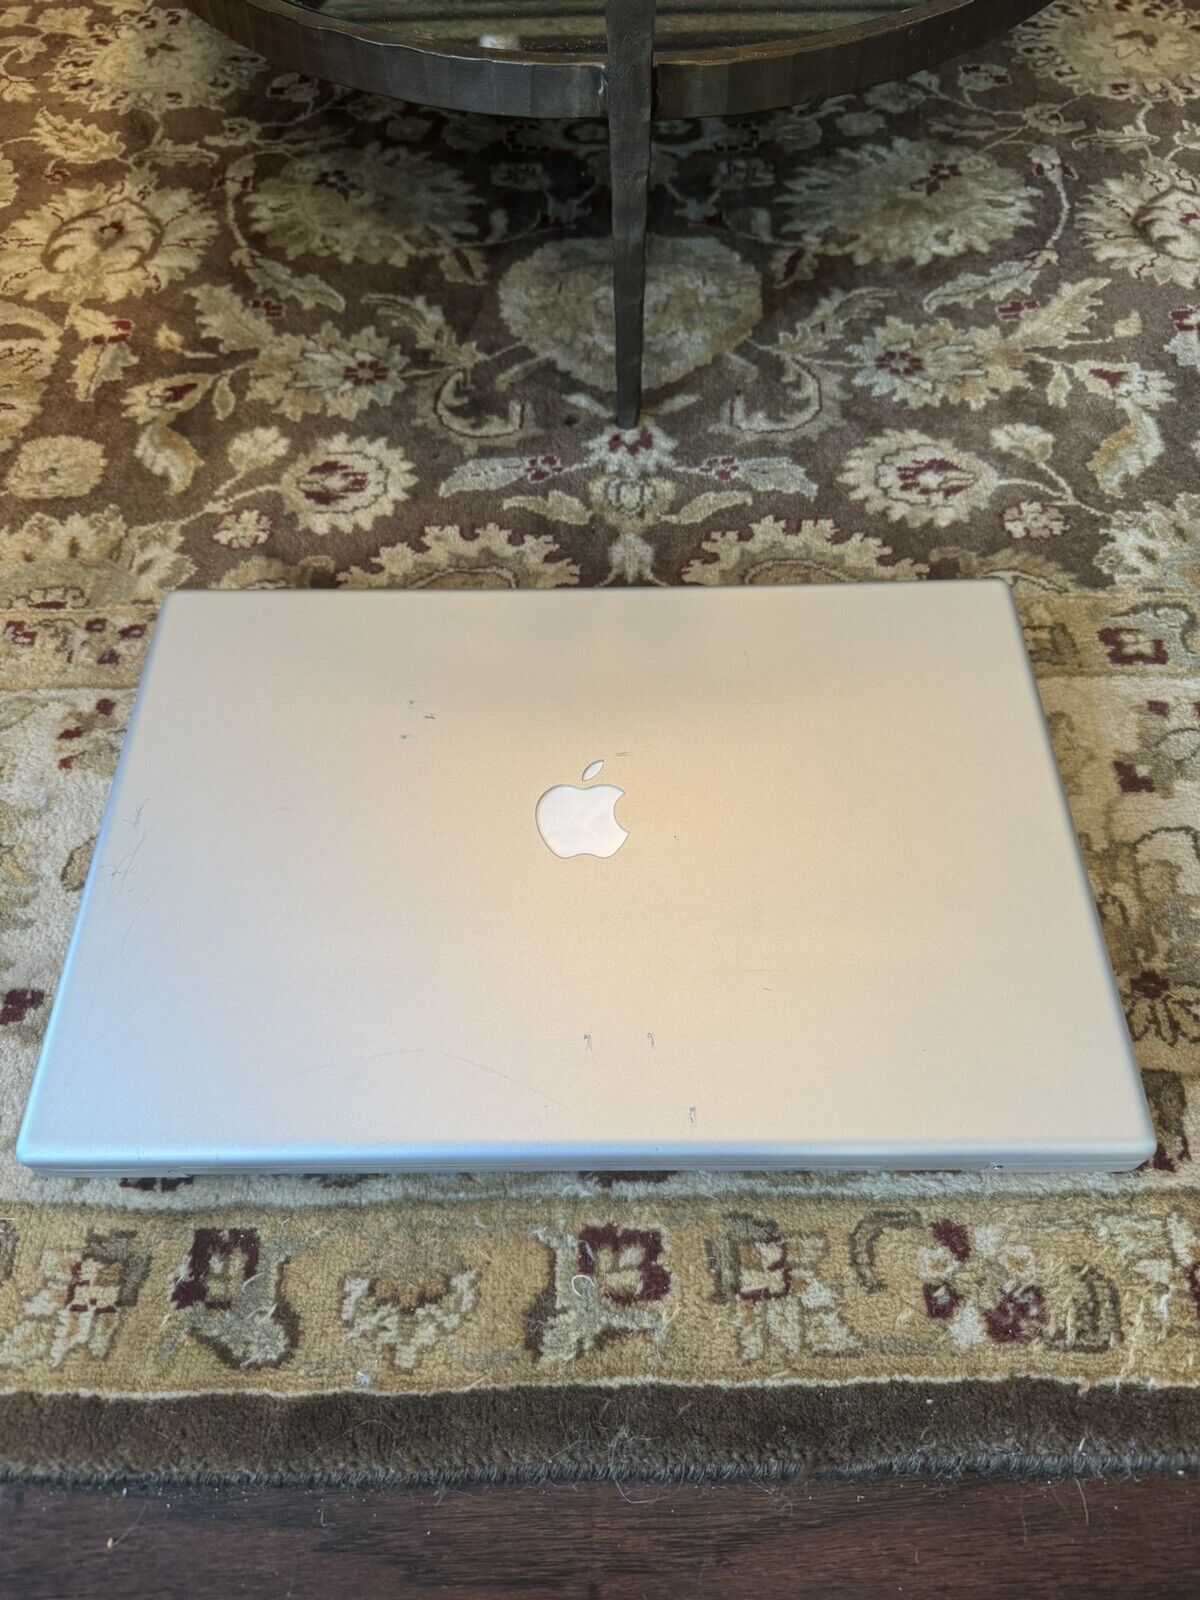 Apple MacBook Pro “Core 2 Duo” 2.4 GHz 17”Laptop - MA897LL/A - A1229